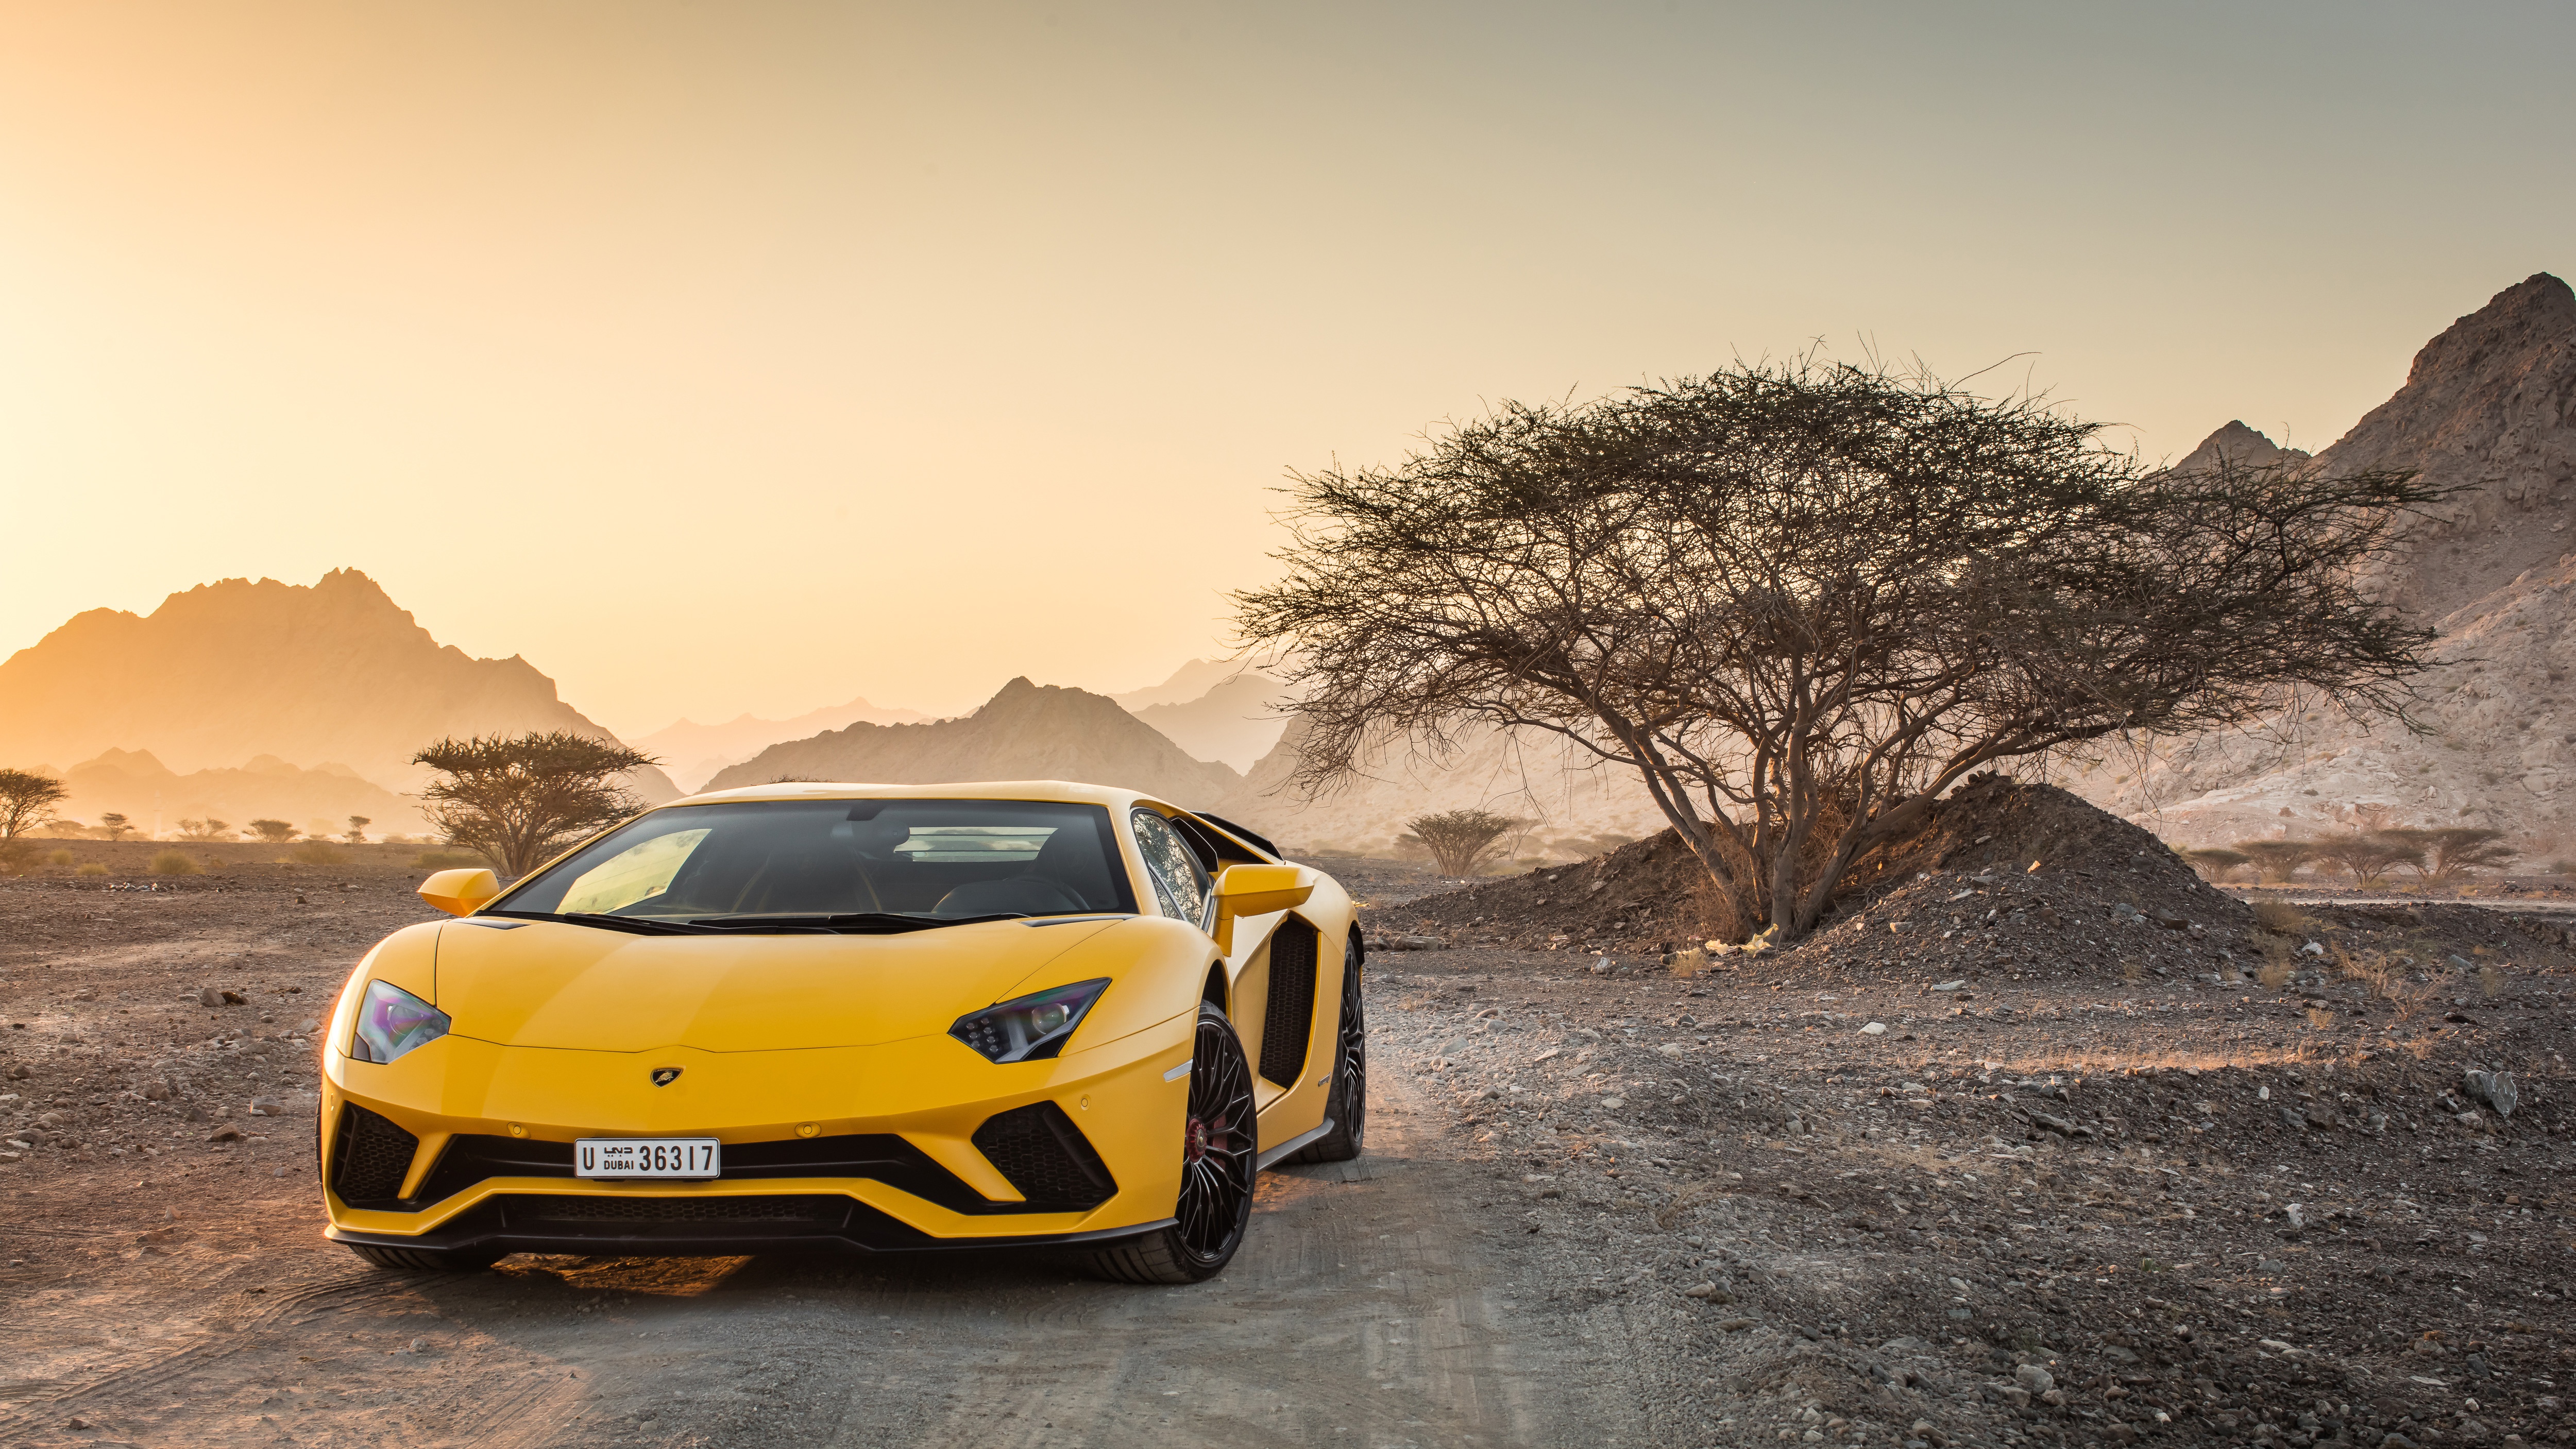 Télécharger des fonds d'écran Lamborghini Aventador S HD